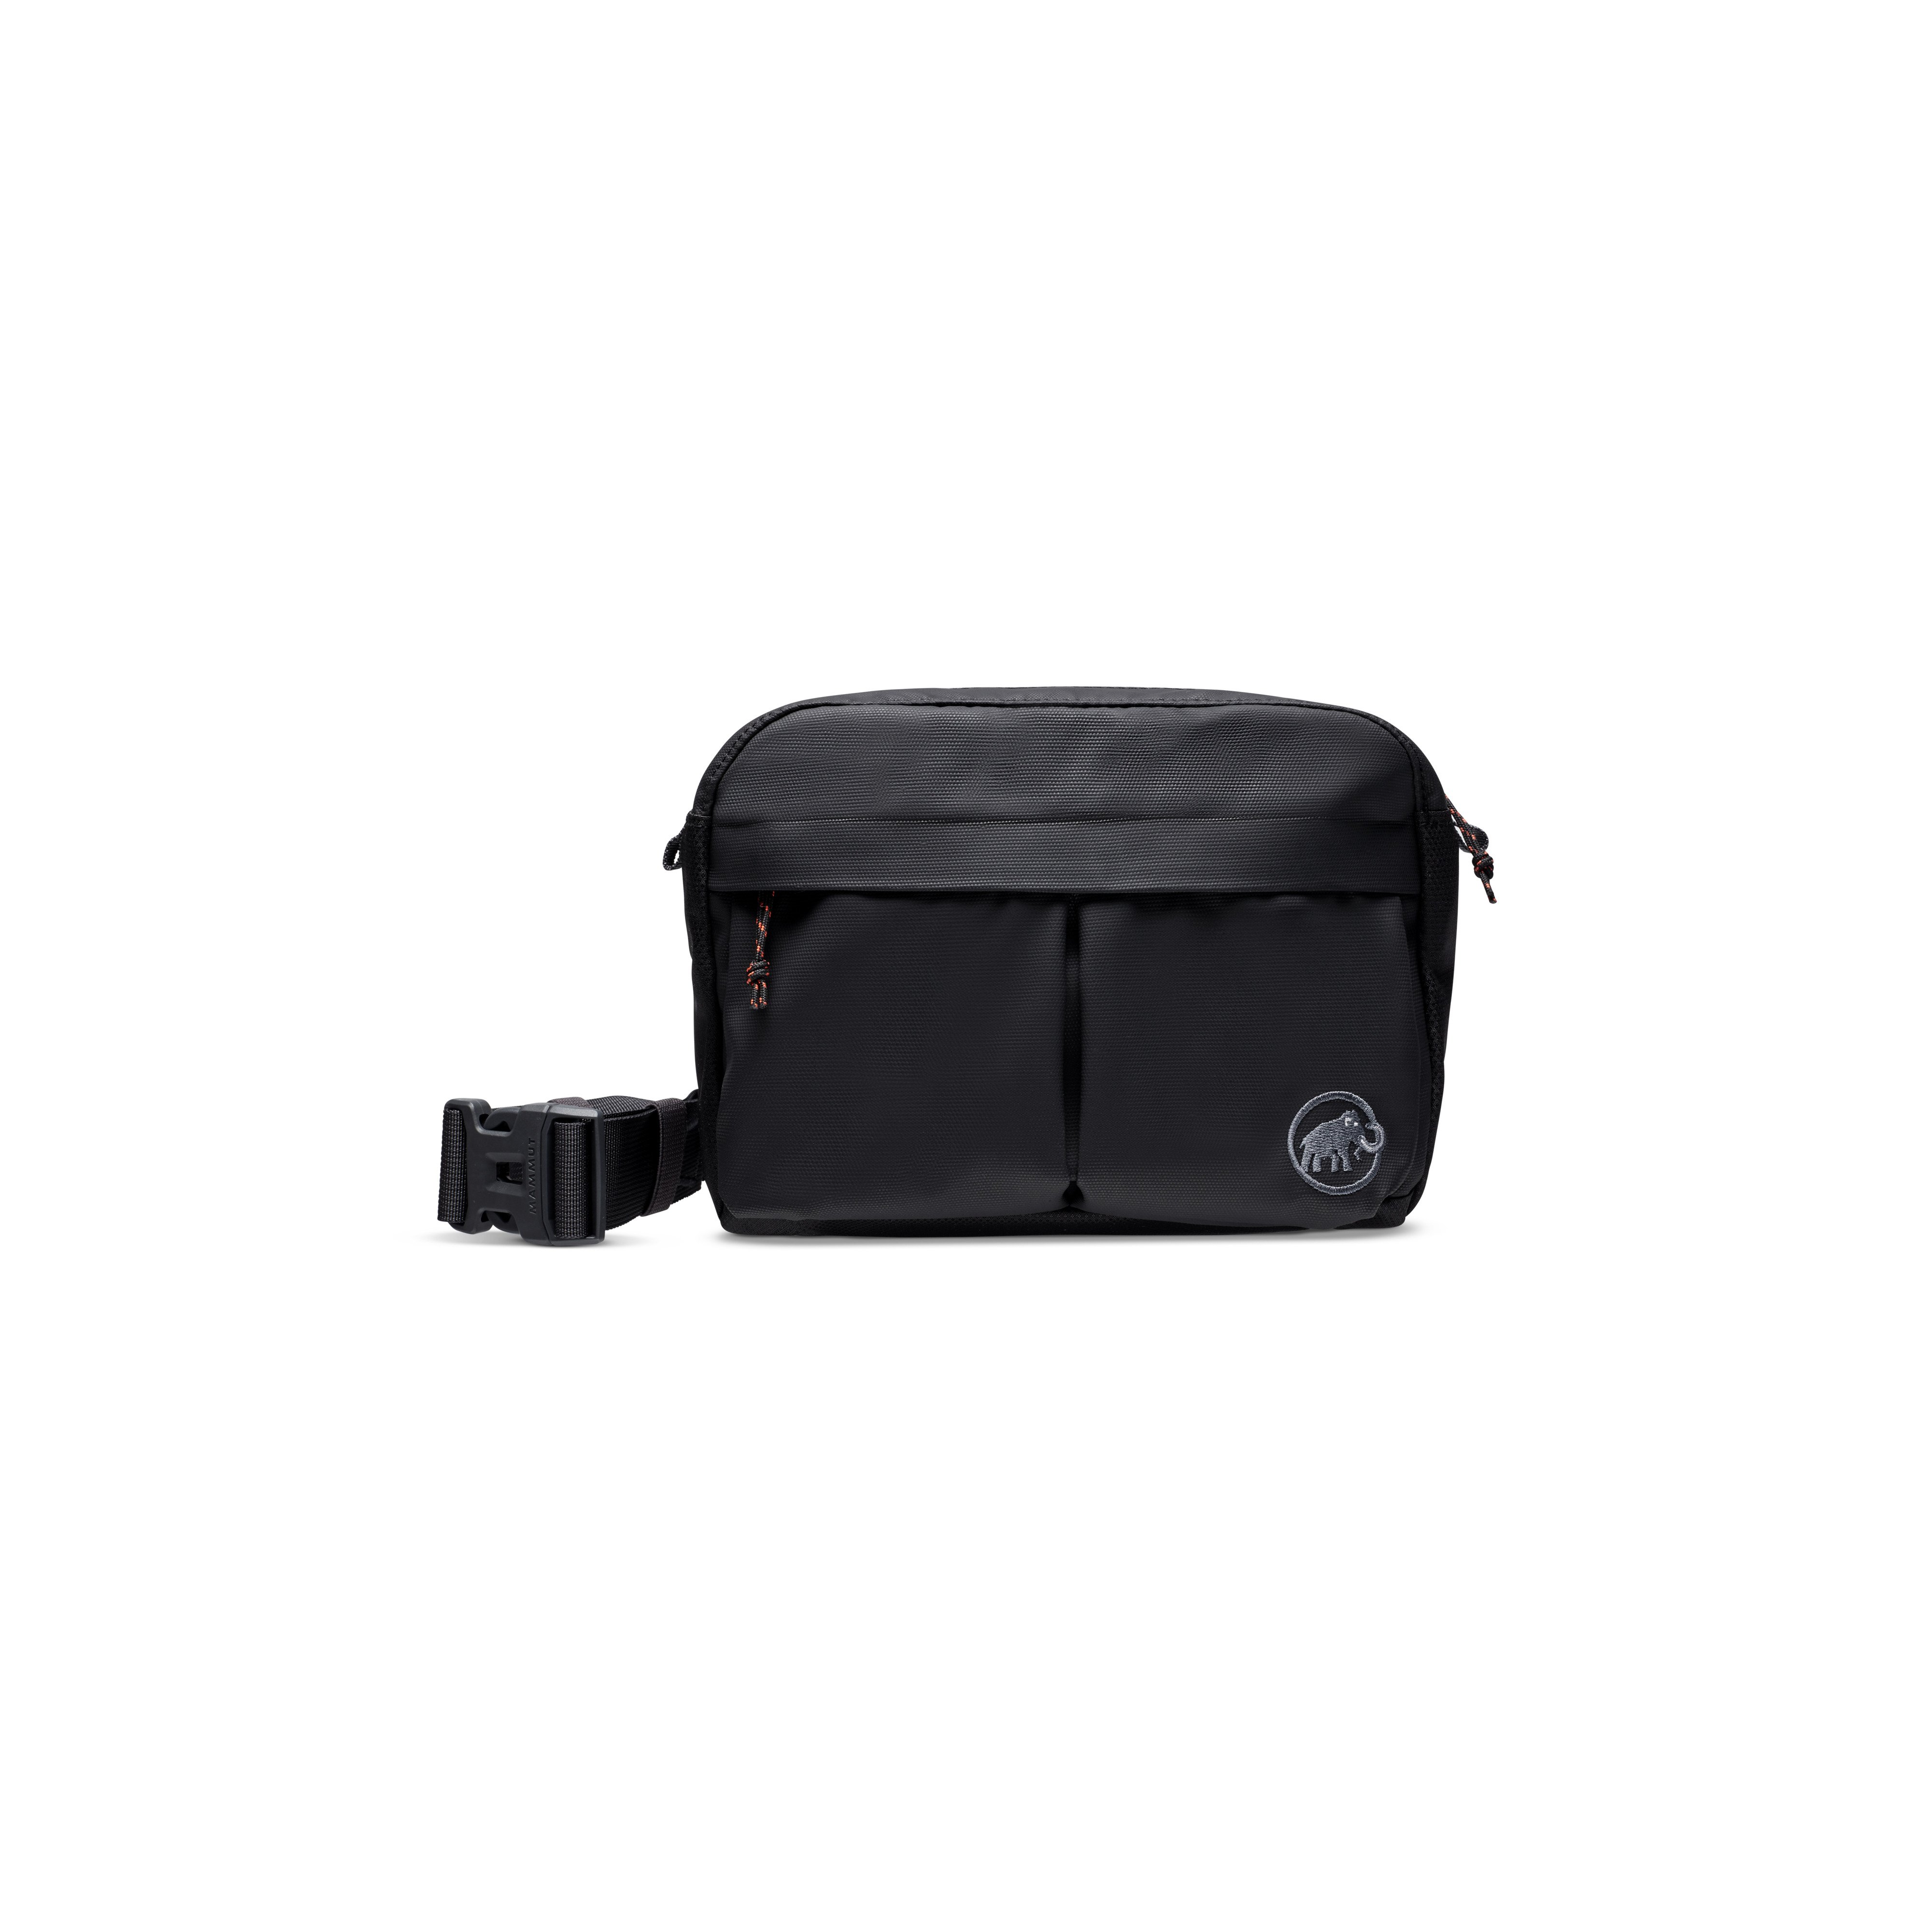 Waistpack Urban - black, 3.5 L product image